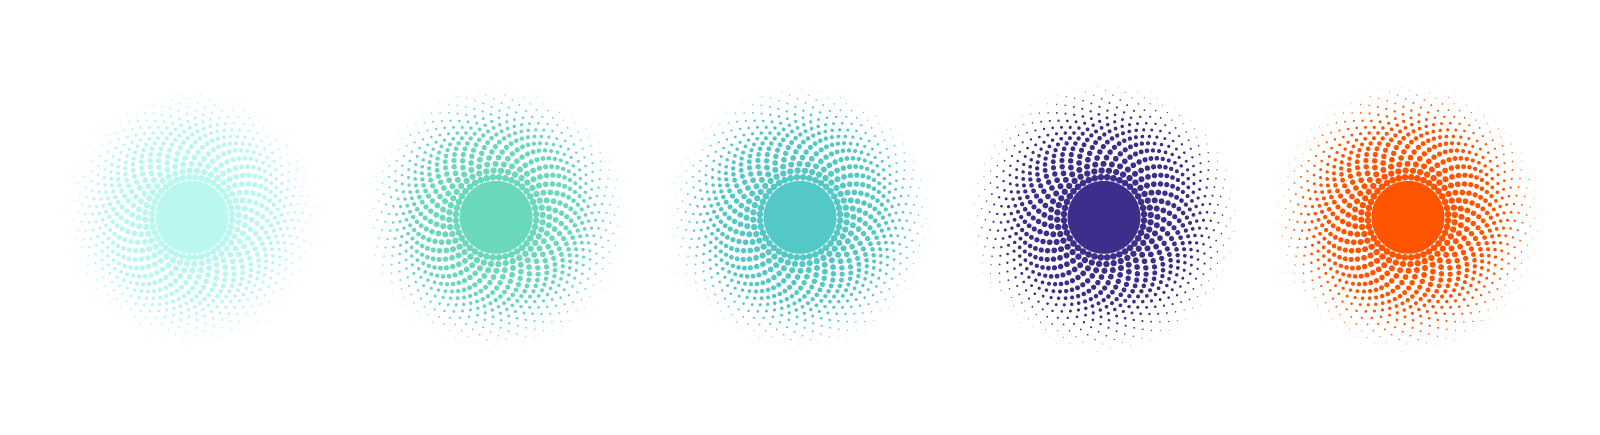 Think Mircal logo spirals colour variations